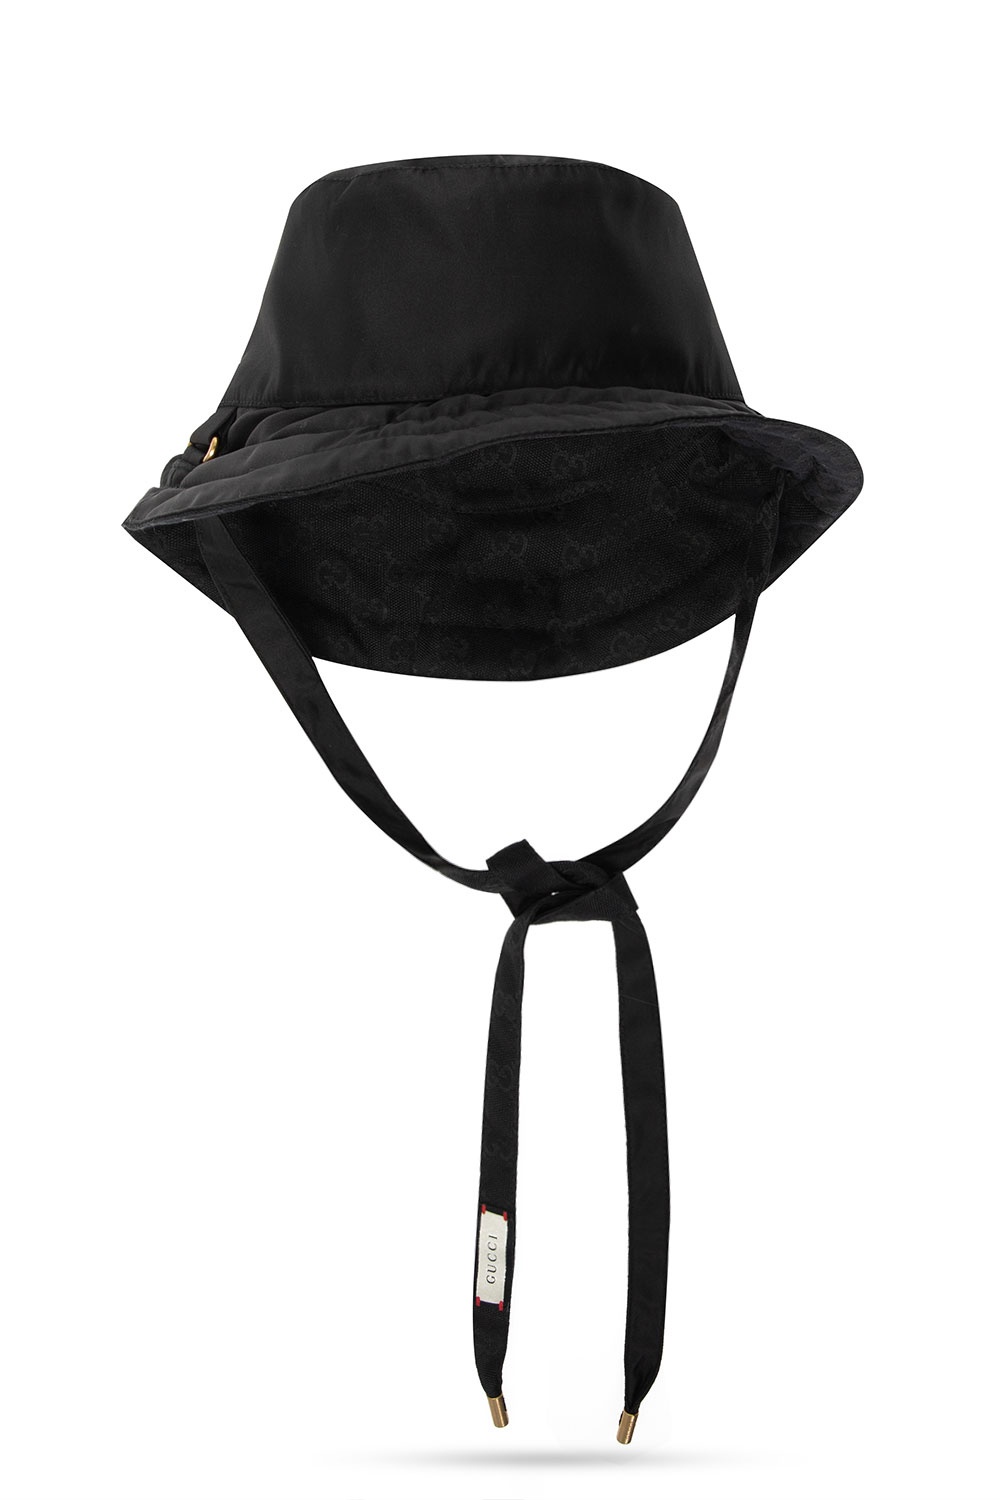 classic twill - cotton hat dad IetpShops low profile Black with flexfit Bucket Gucci - cap Nicaragua logo